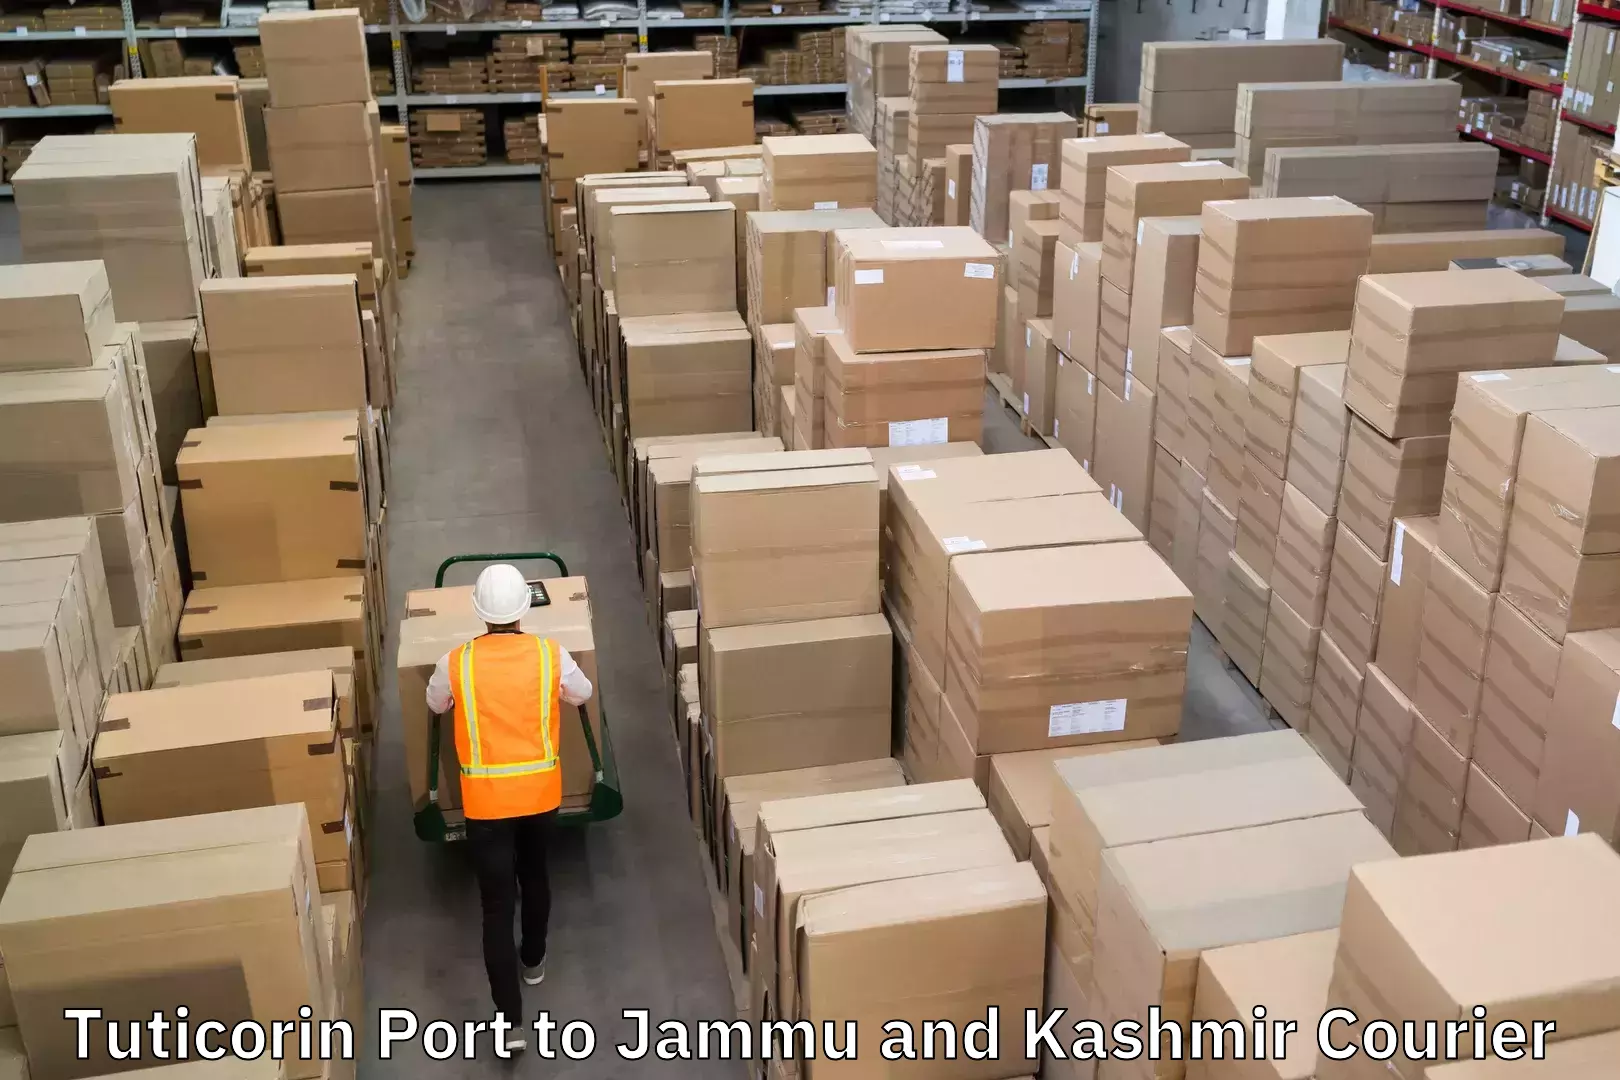 Express logistics service in Tuticorin Port to Jammu and Kashmir